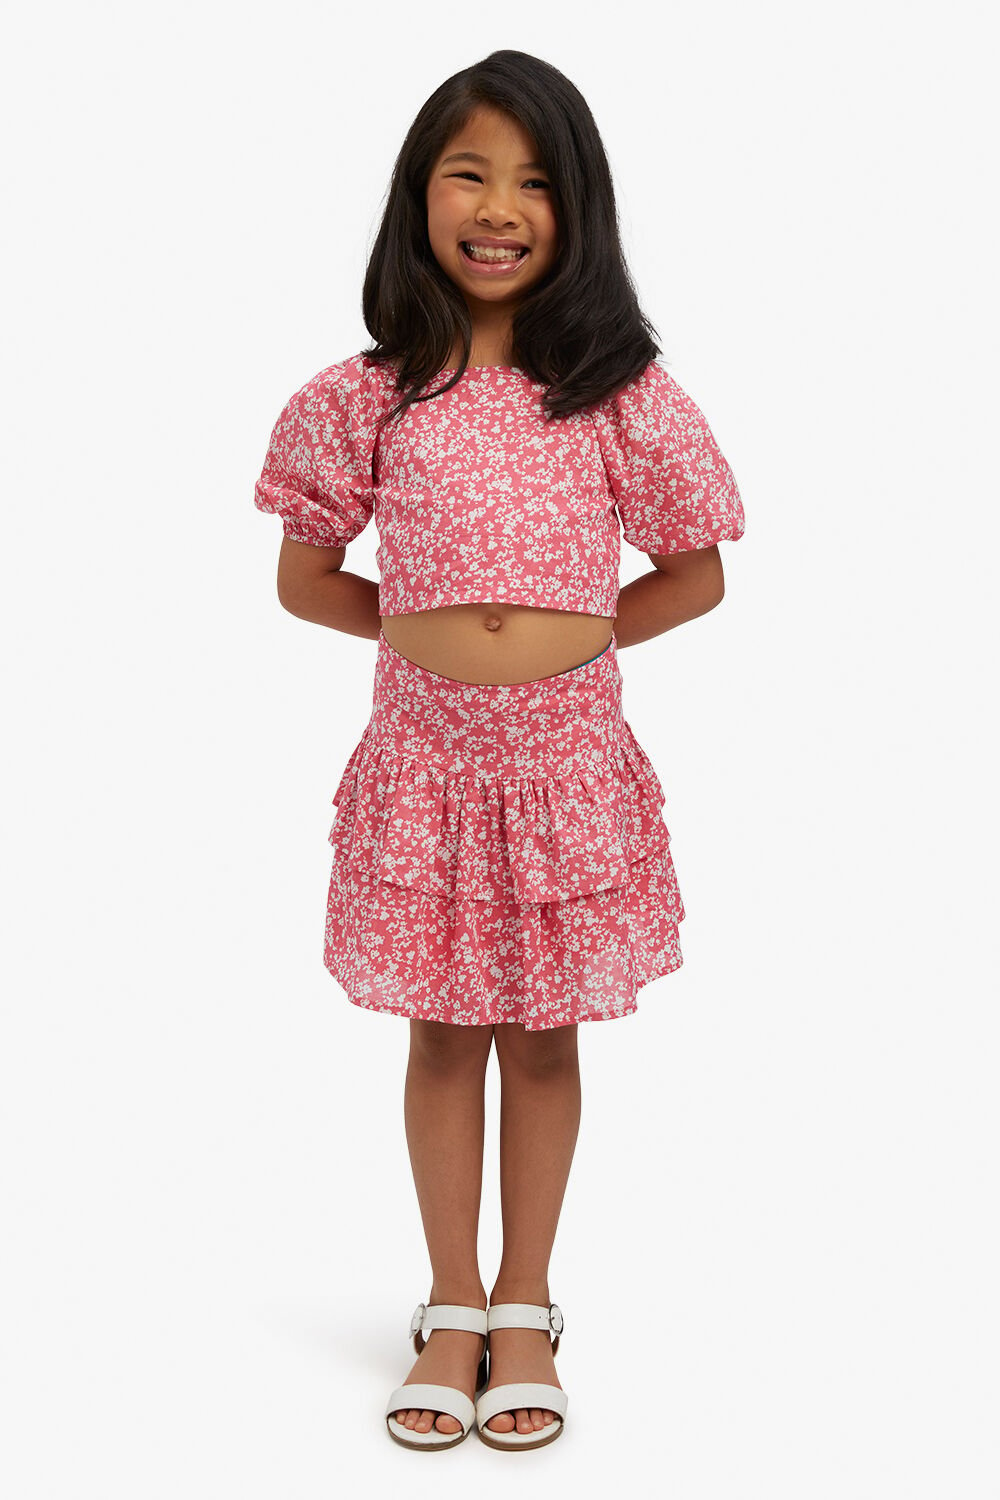 Buy Skirt and Top for Kid Girls  Mumkins